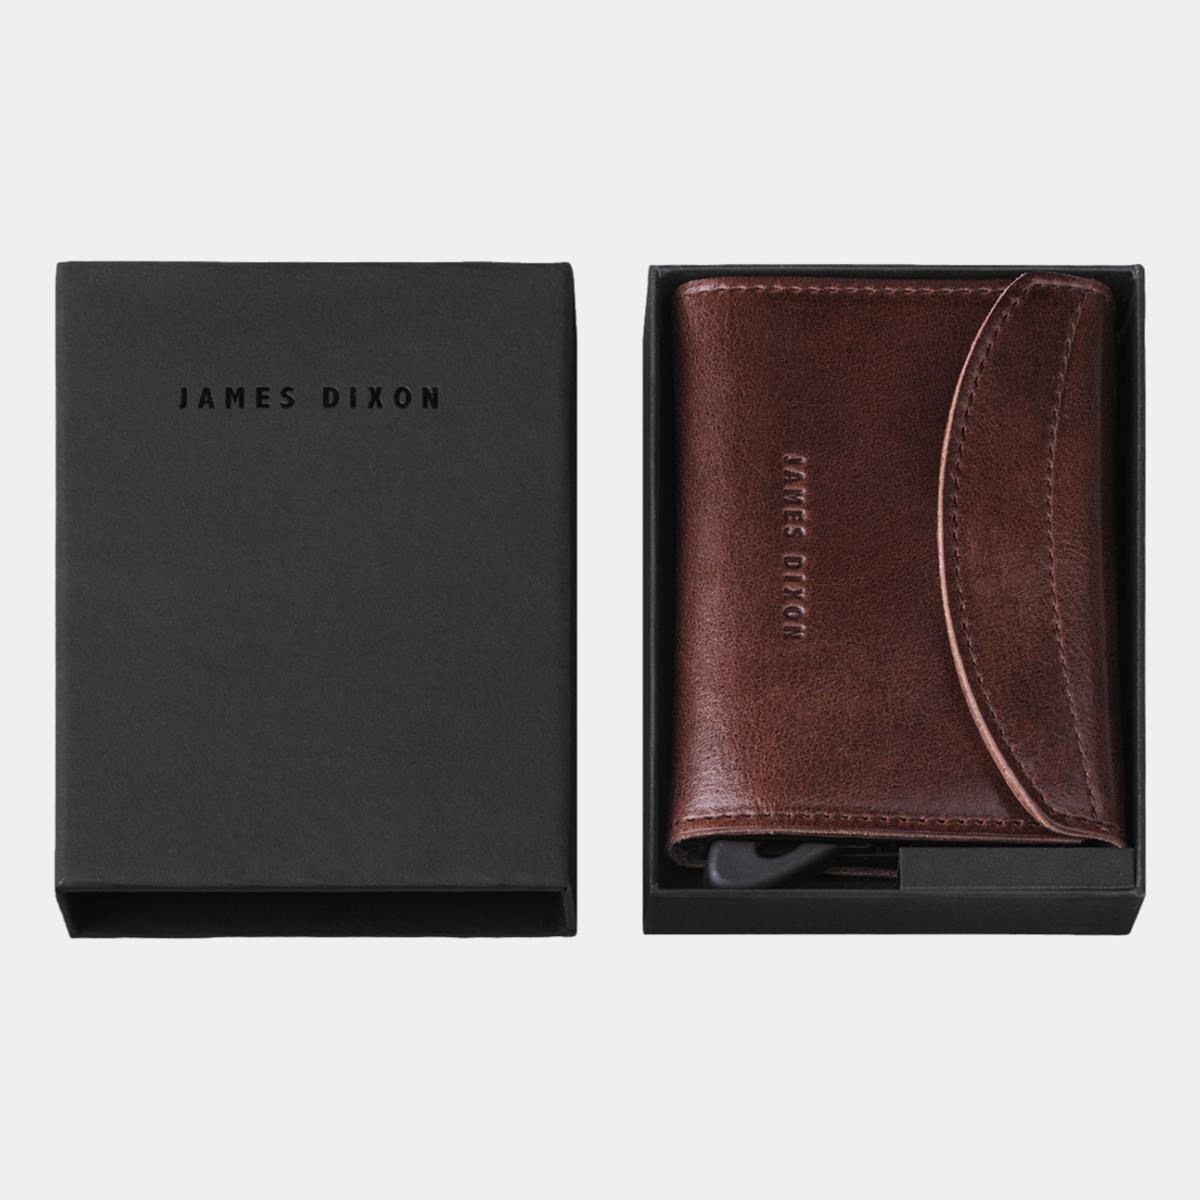 jd0104 james dixon grande classic cacao brown coin pocket wallet box